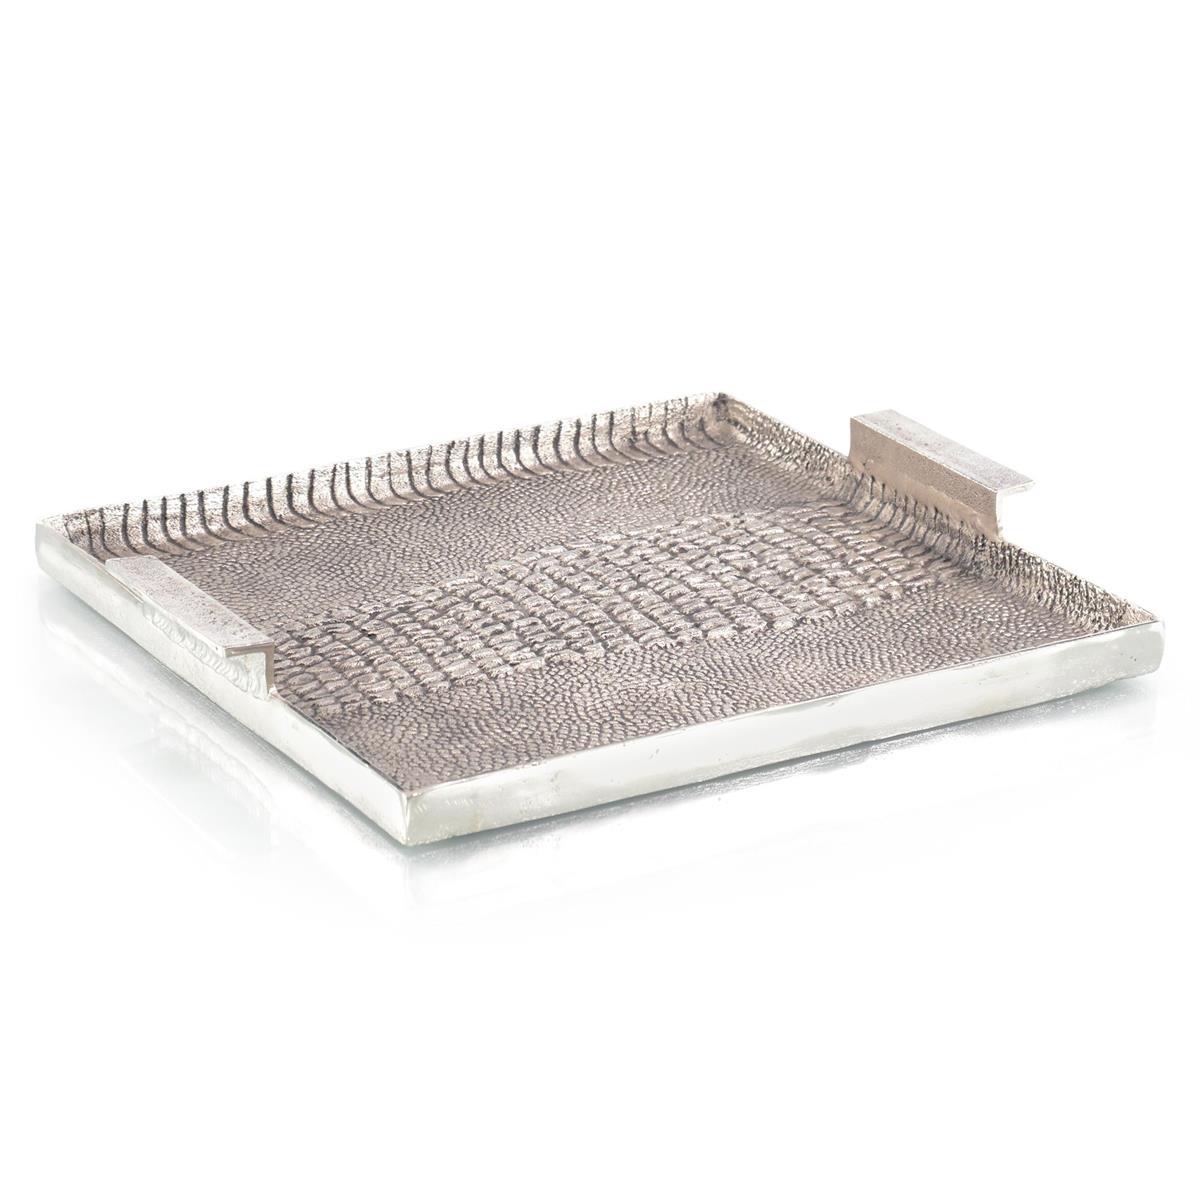 Alligator Textured Aluminum Tray I-John Richard-Trays-Artistic Elements